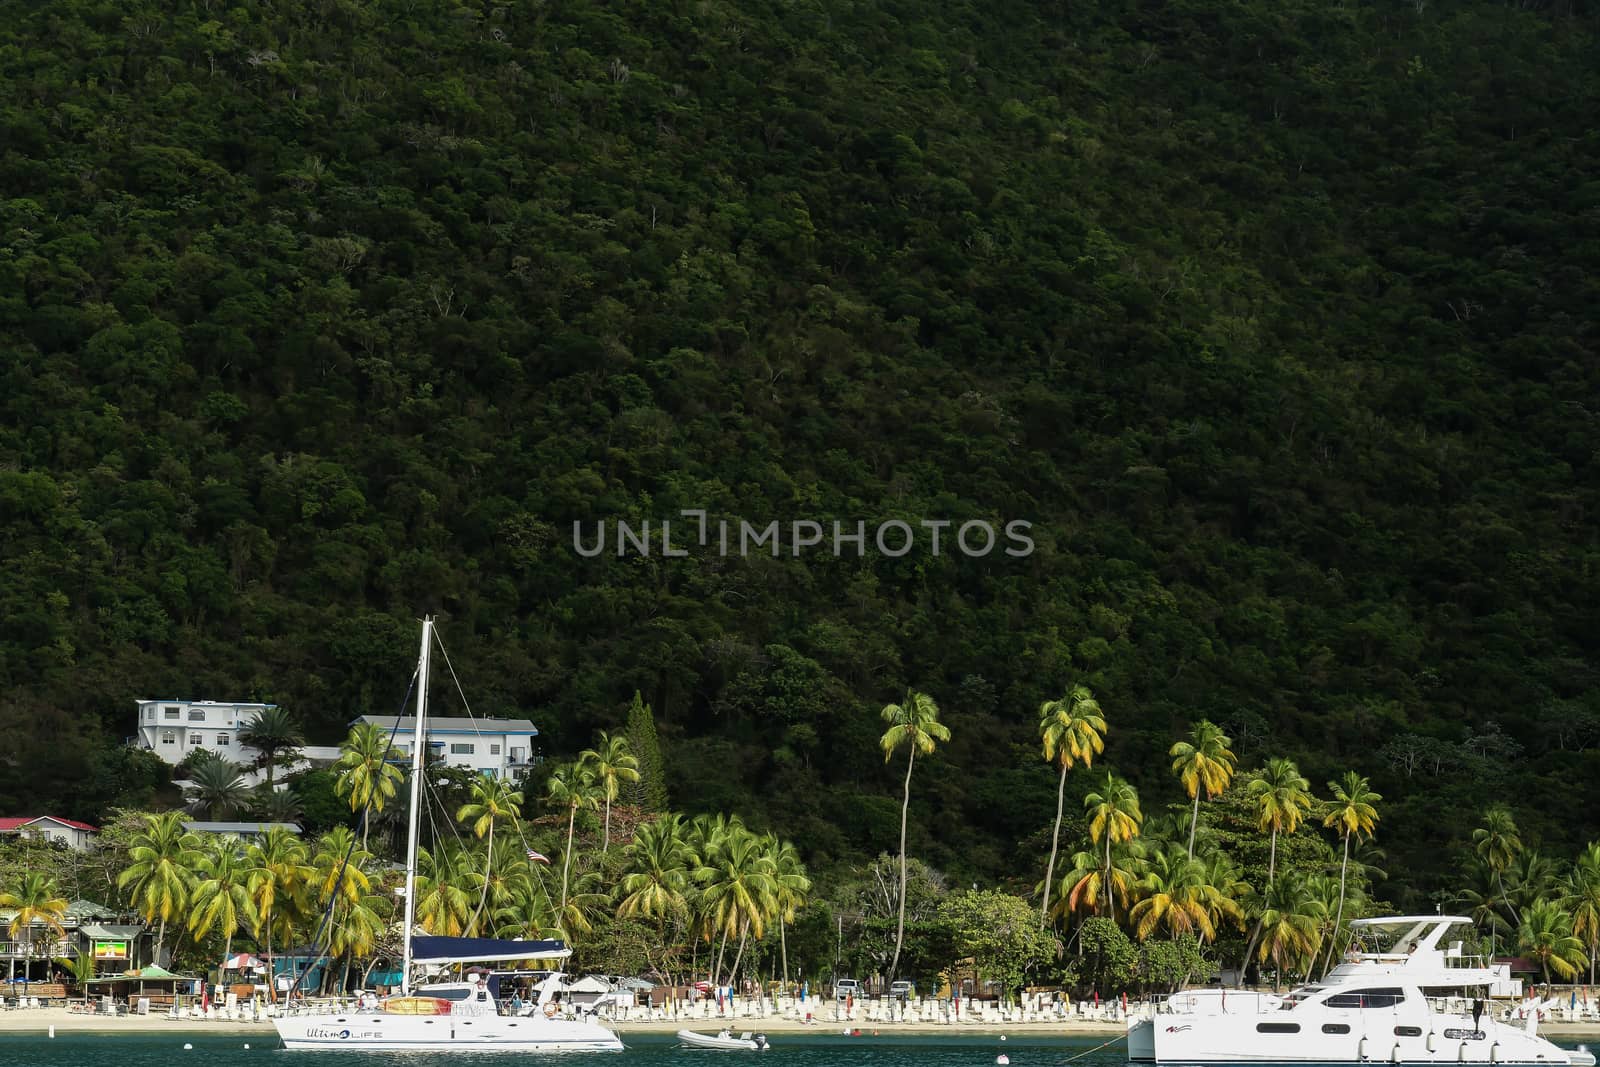 yachts at moorings s in small British Virgin Islands beach community.